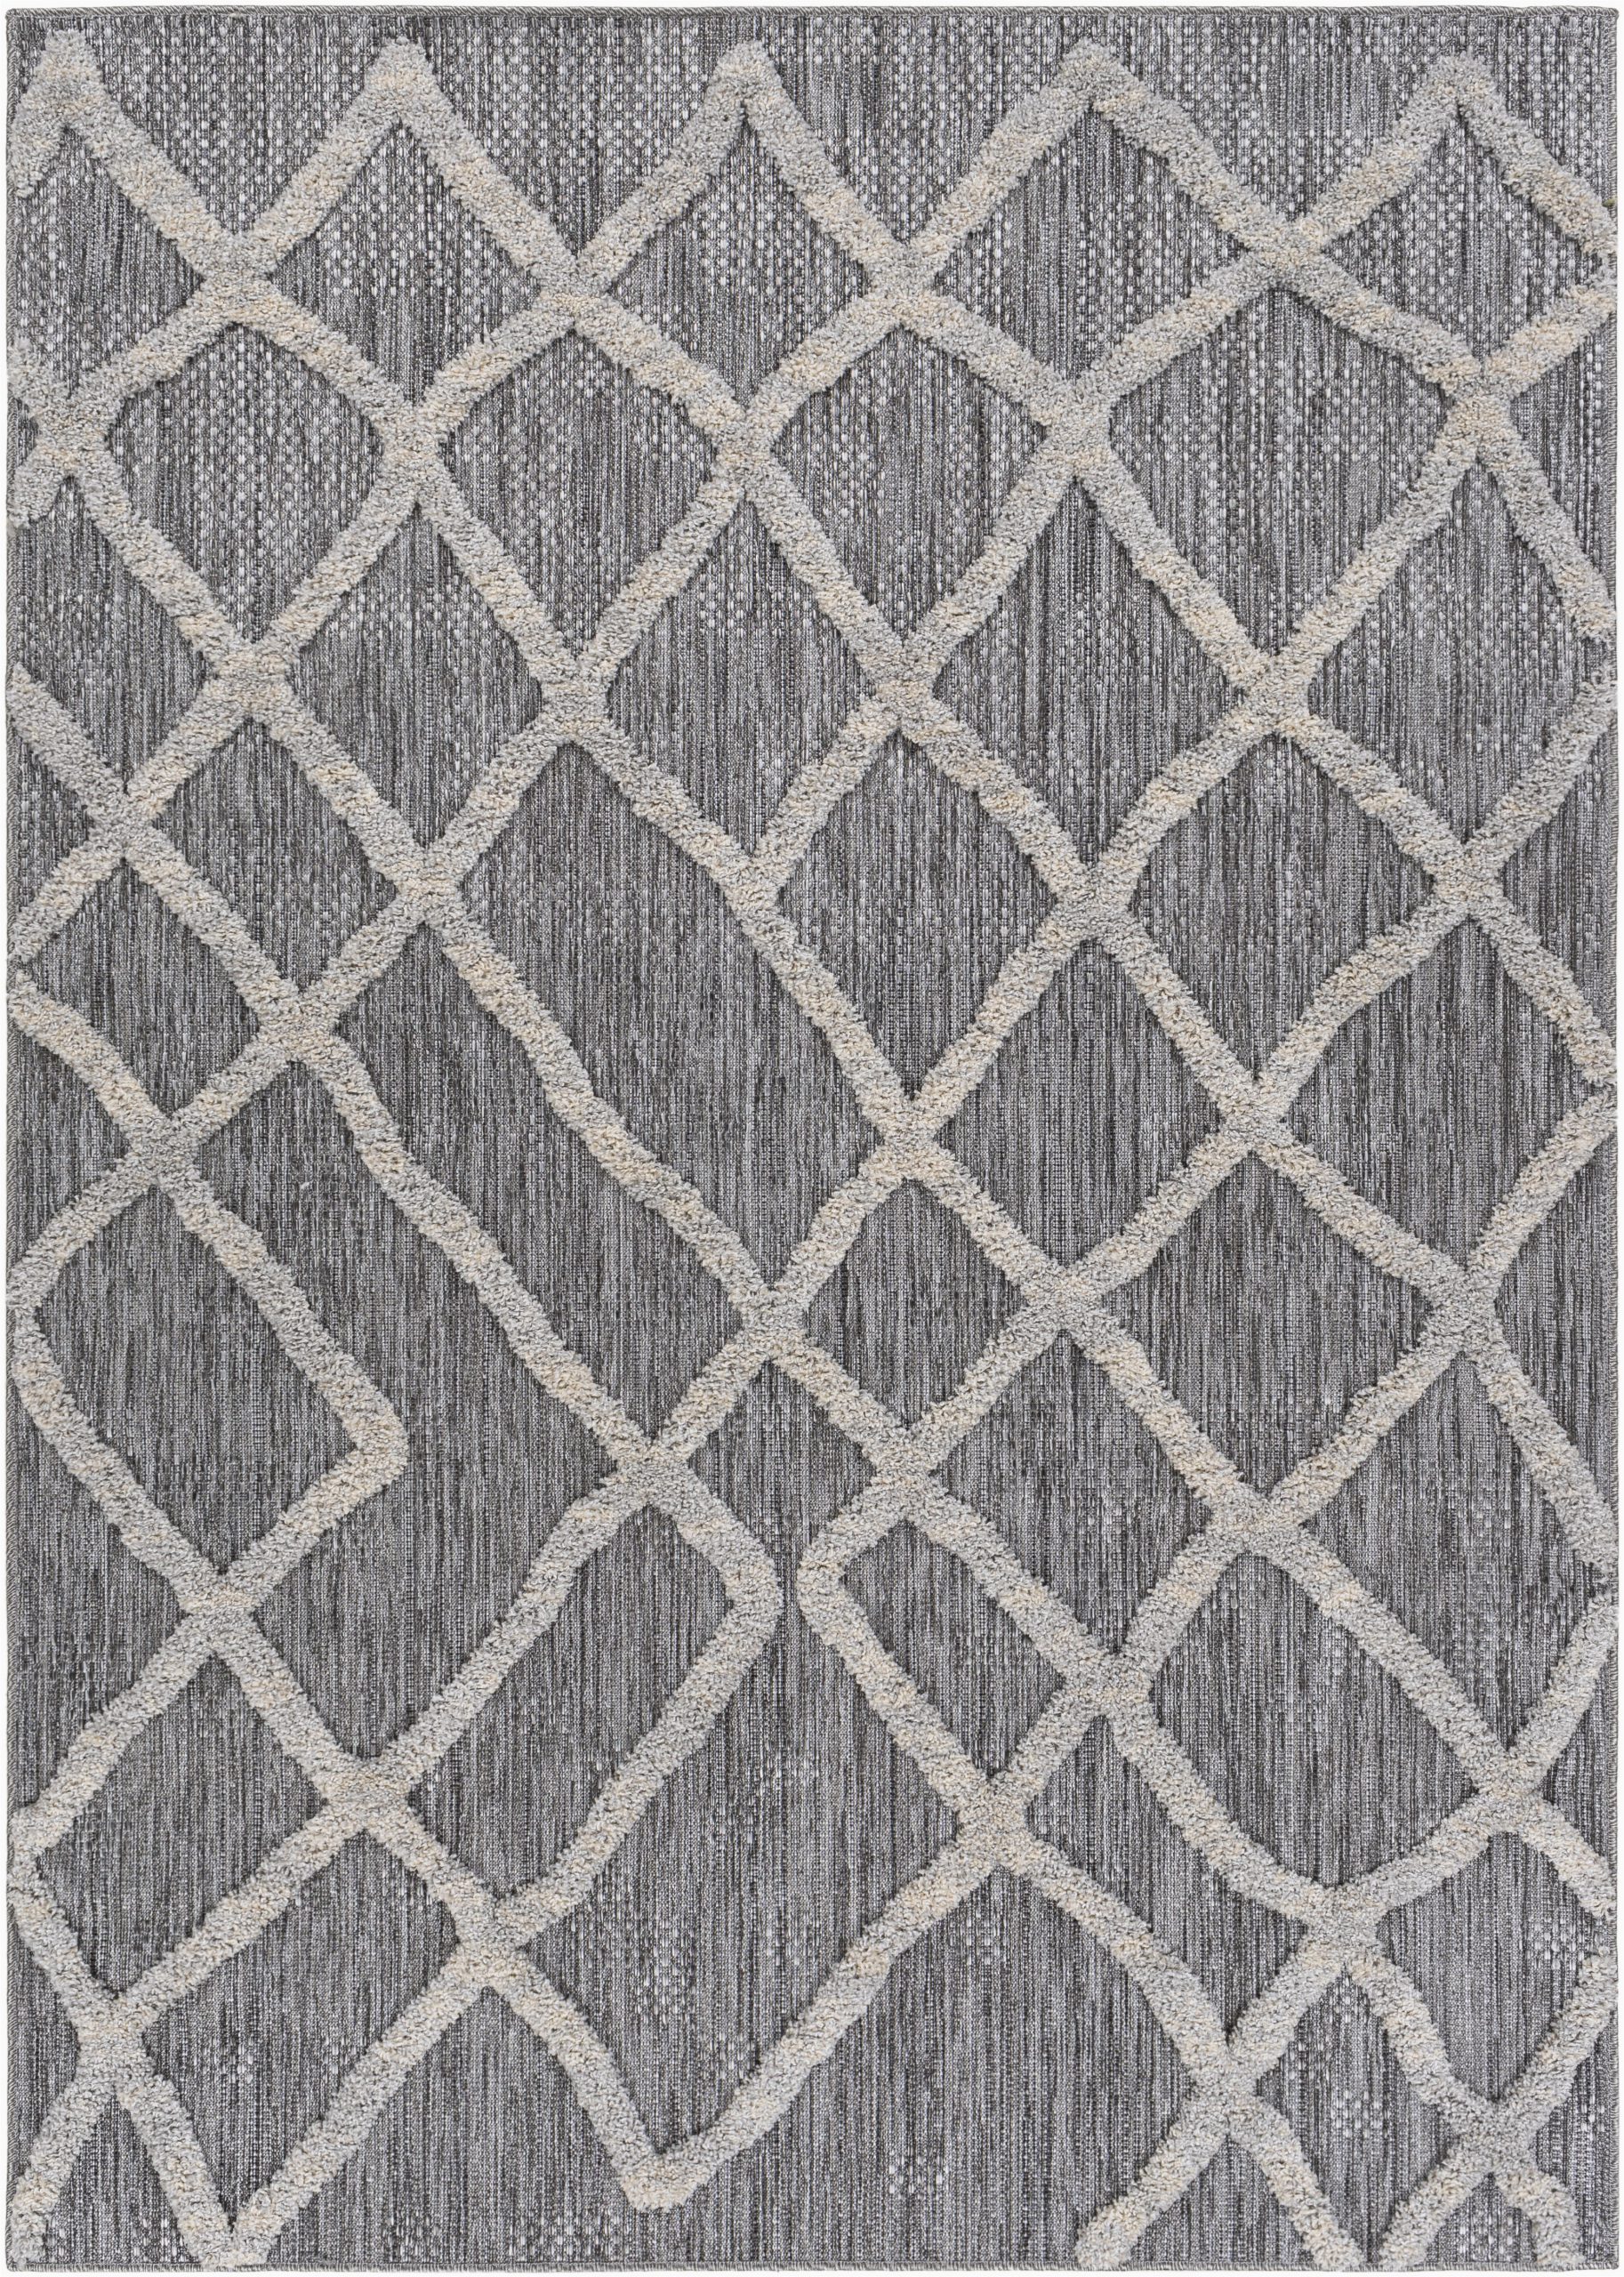 wyman geometric charcoalgray indoor outdoor area rug